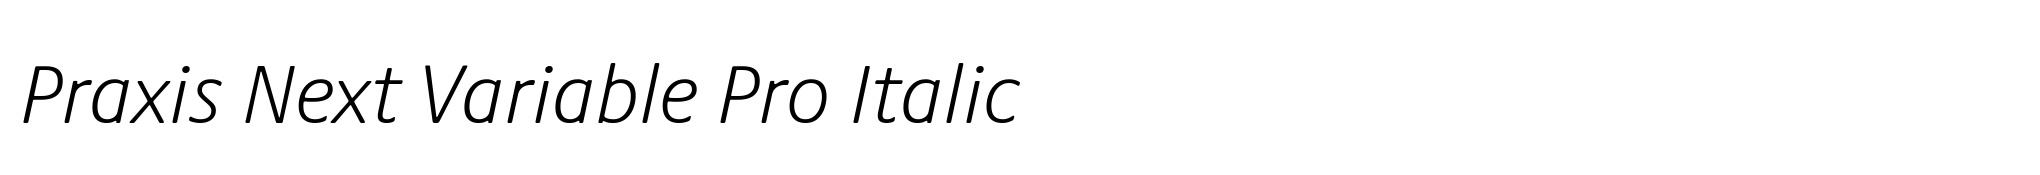 Praxis Next Variable Pro Italic image